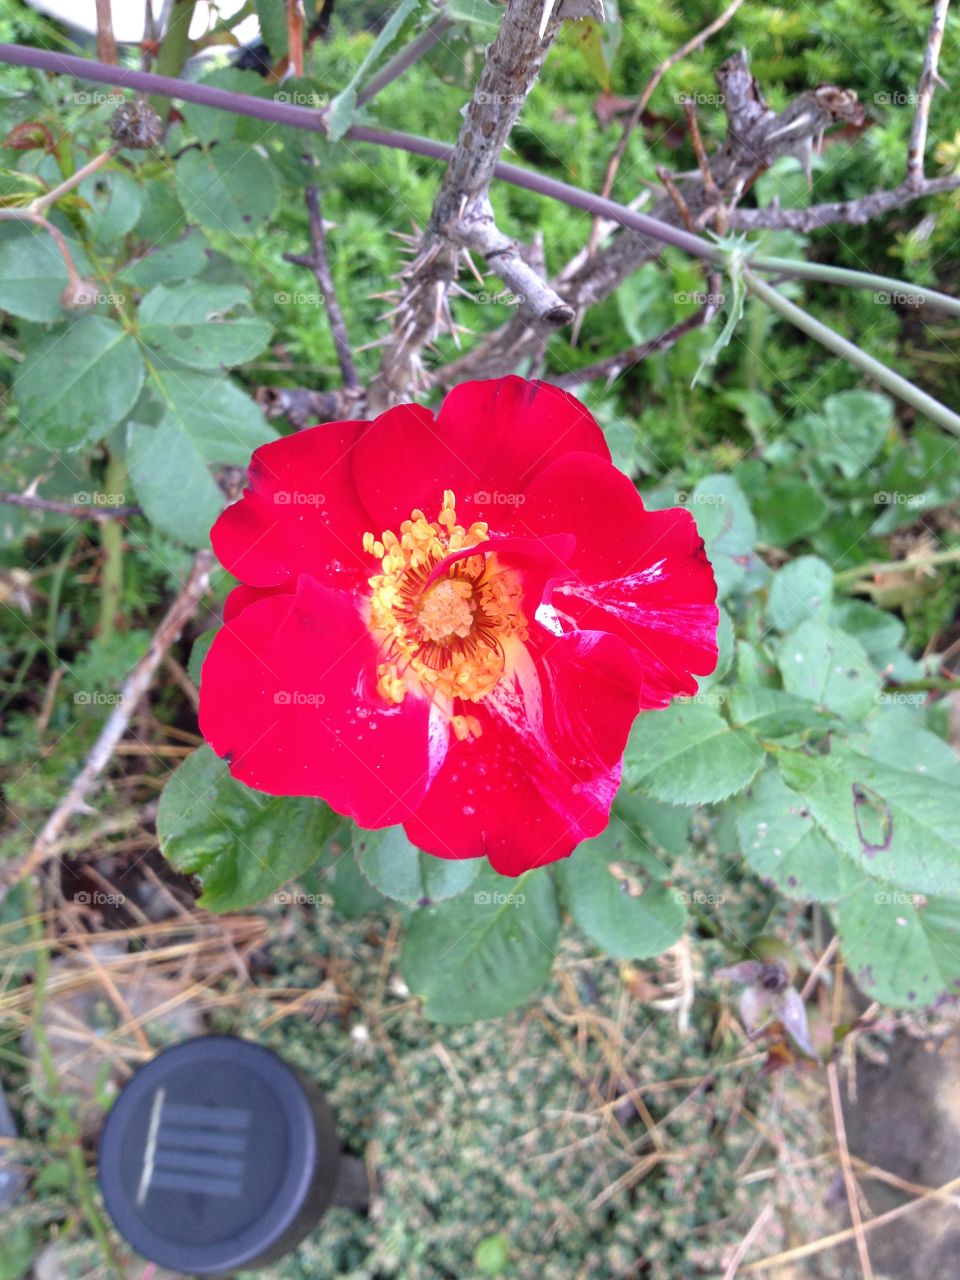 Red rose, backyard flower garden